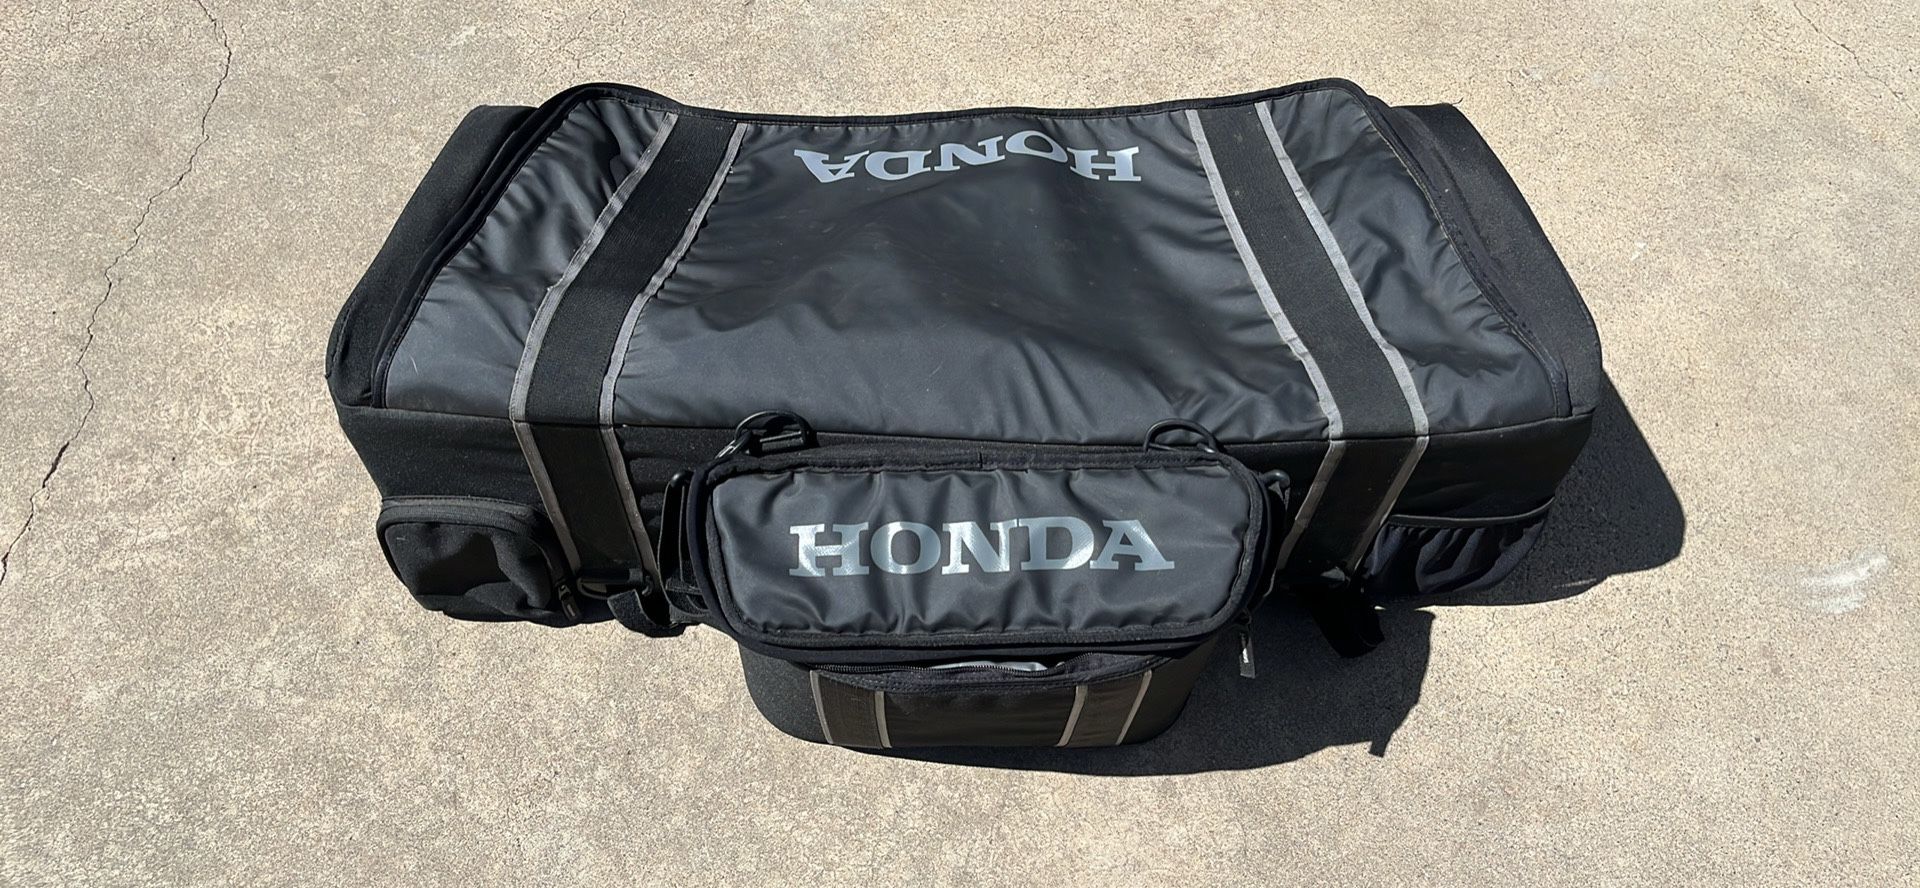 Honda Atv Rear Bag with Detachable Honda Cooler Bag